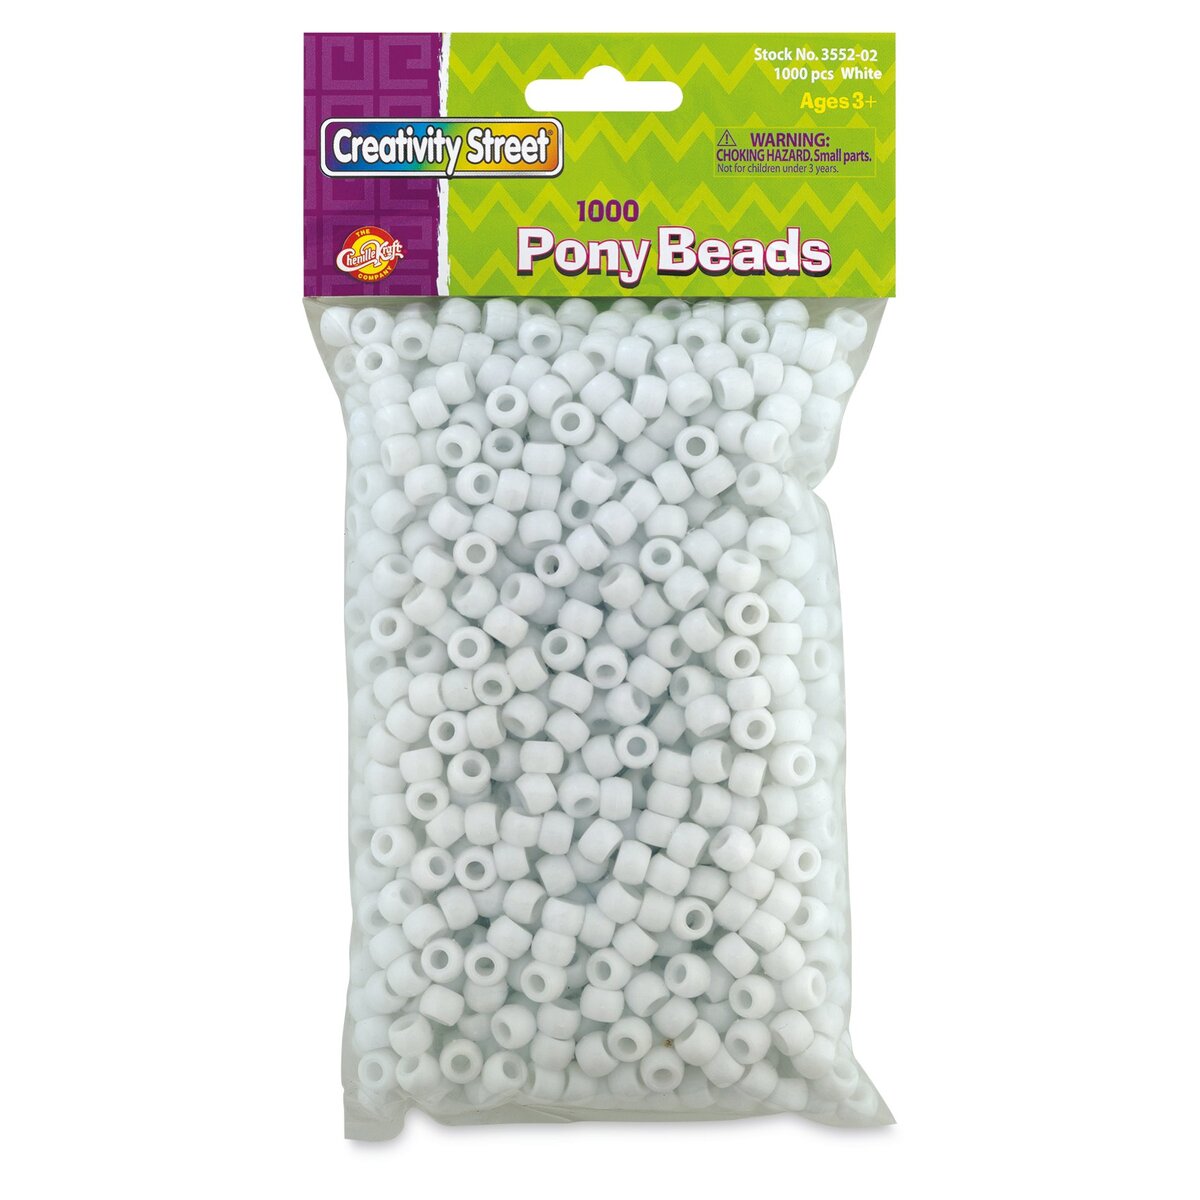 Creativity Street Pony Beads White 1000 Pieces